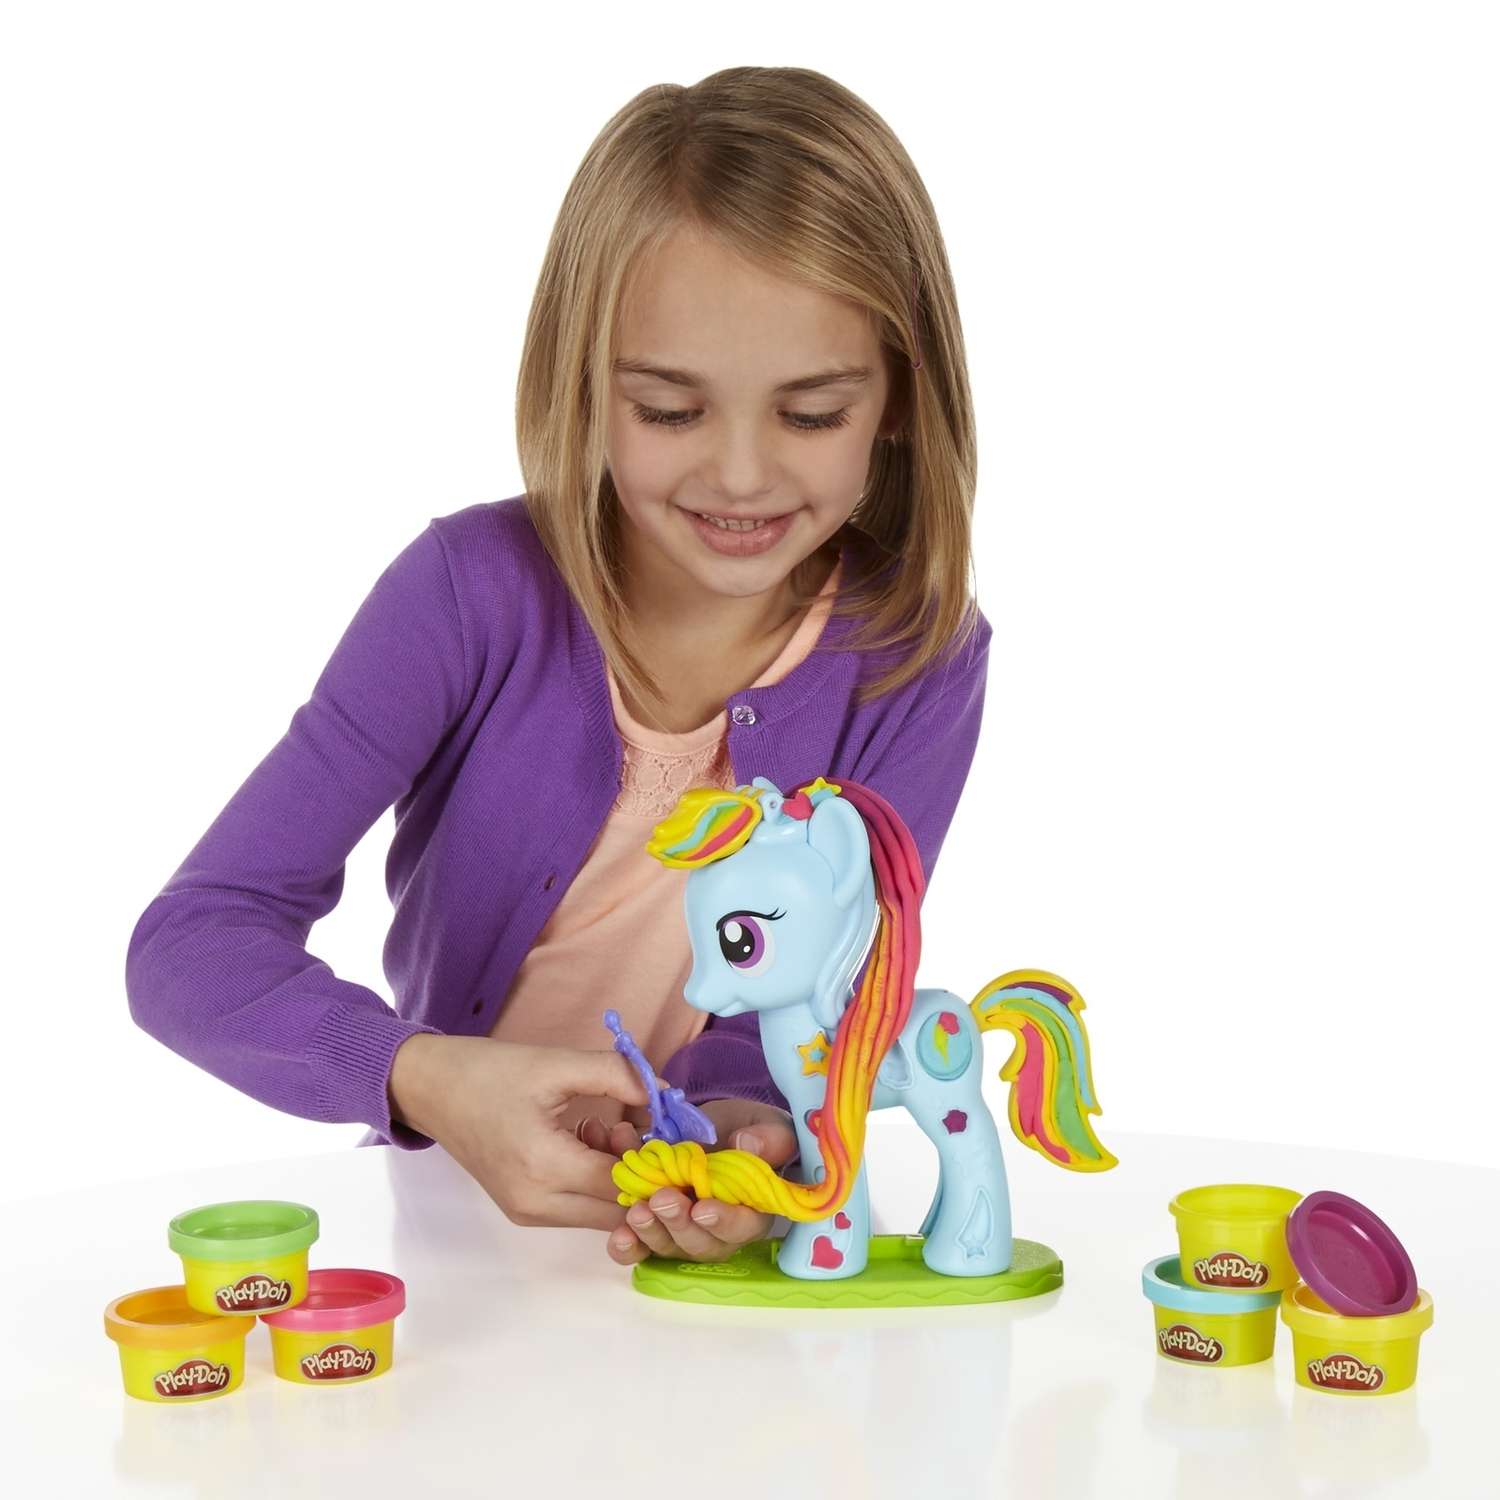 Набор пластилина Play-Doh Стильный салон Рэйнбоу - фото 9